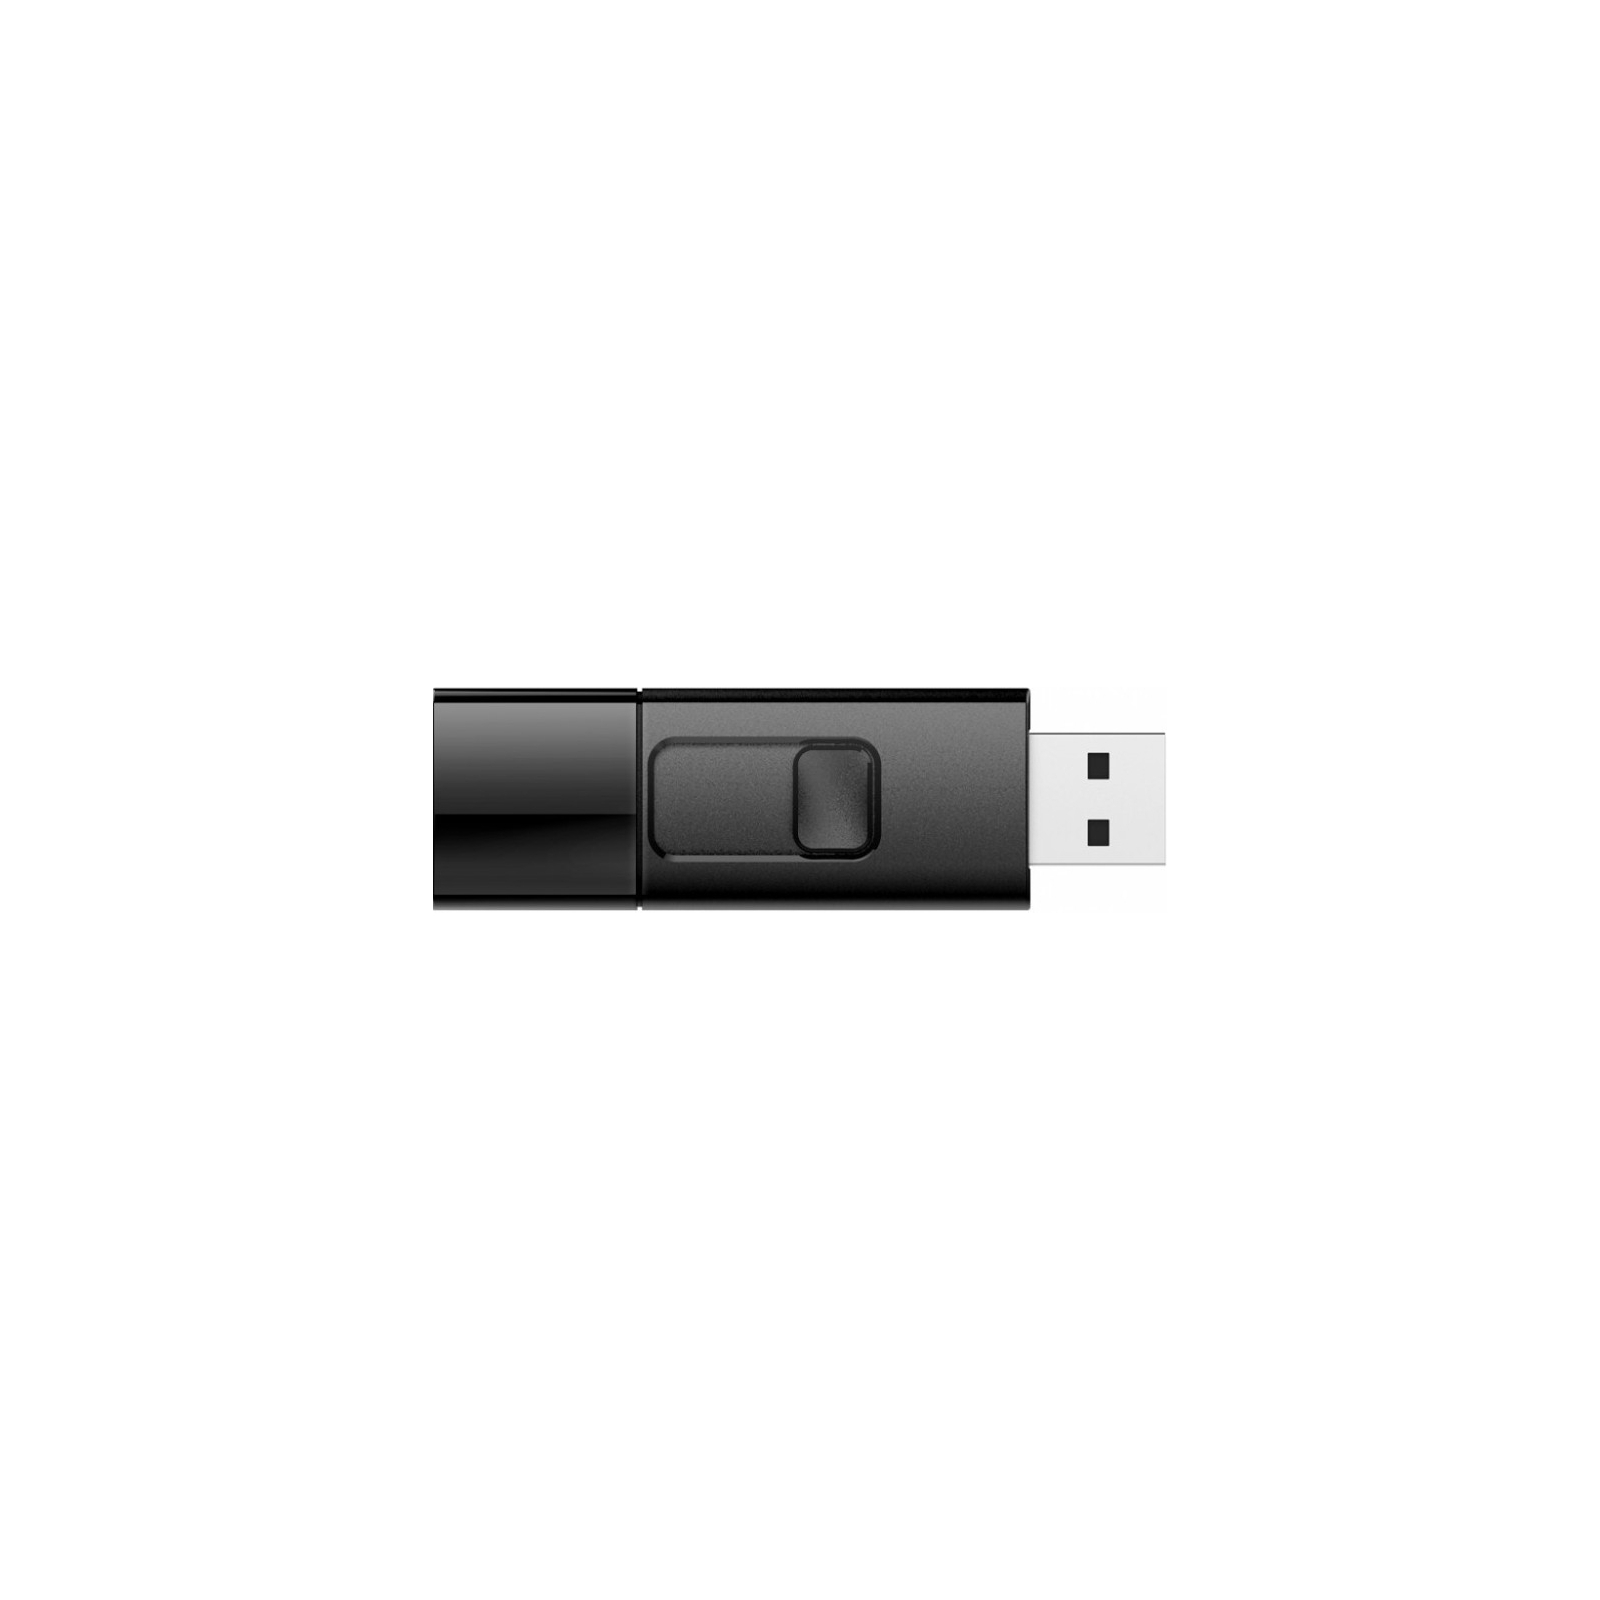 USB флеш накопитель Silicon Power 16GB BLAZE B05 USB 3.0 (SP016GBUF3B05V1K) изображение 3